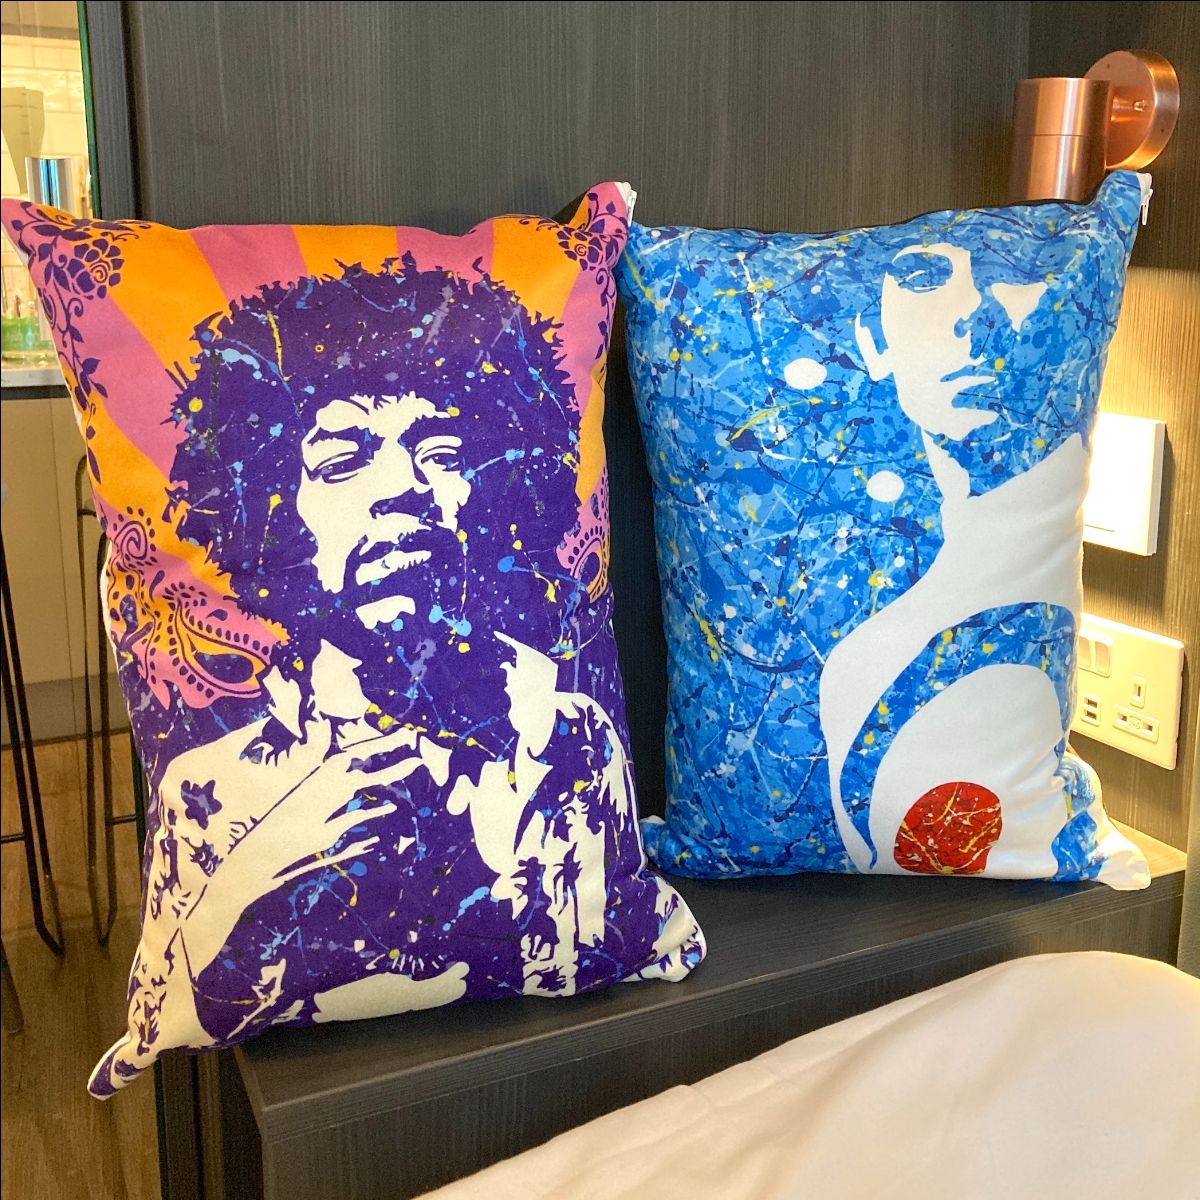 By Kerwin Jackson Pollock-inspired pop art music painting cushions | Jimi Hendrix & The Who Keith Moon merchandise